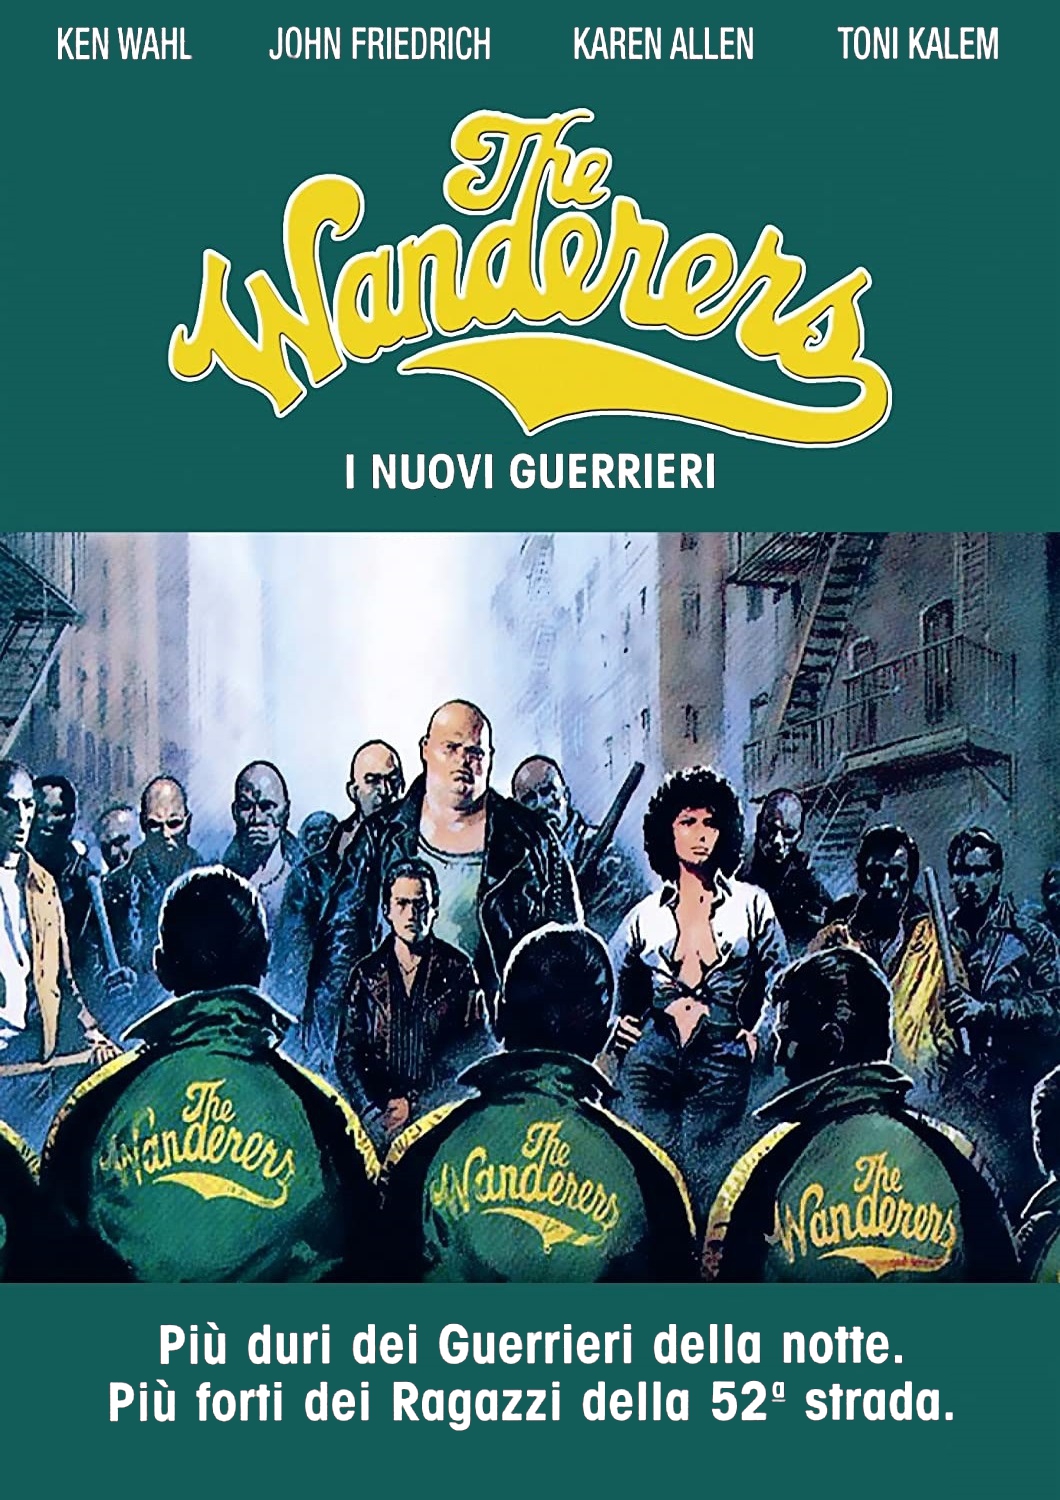 The Wanderers – I nuovi guerrieri [HD] (1979)